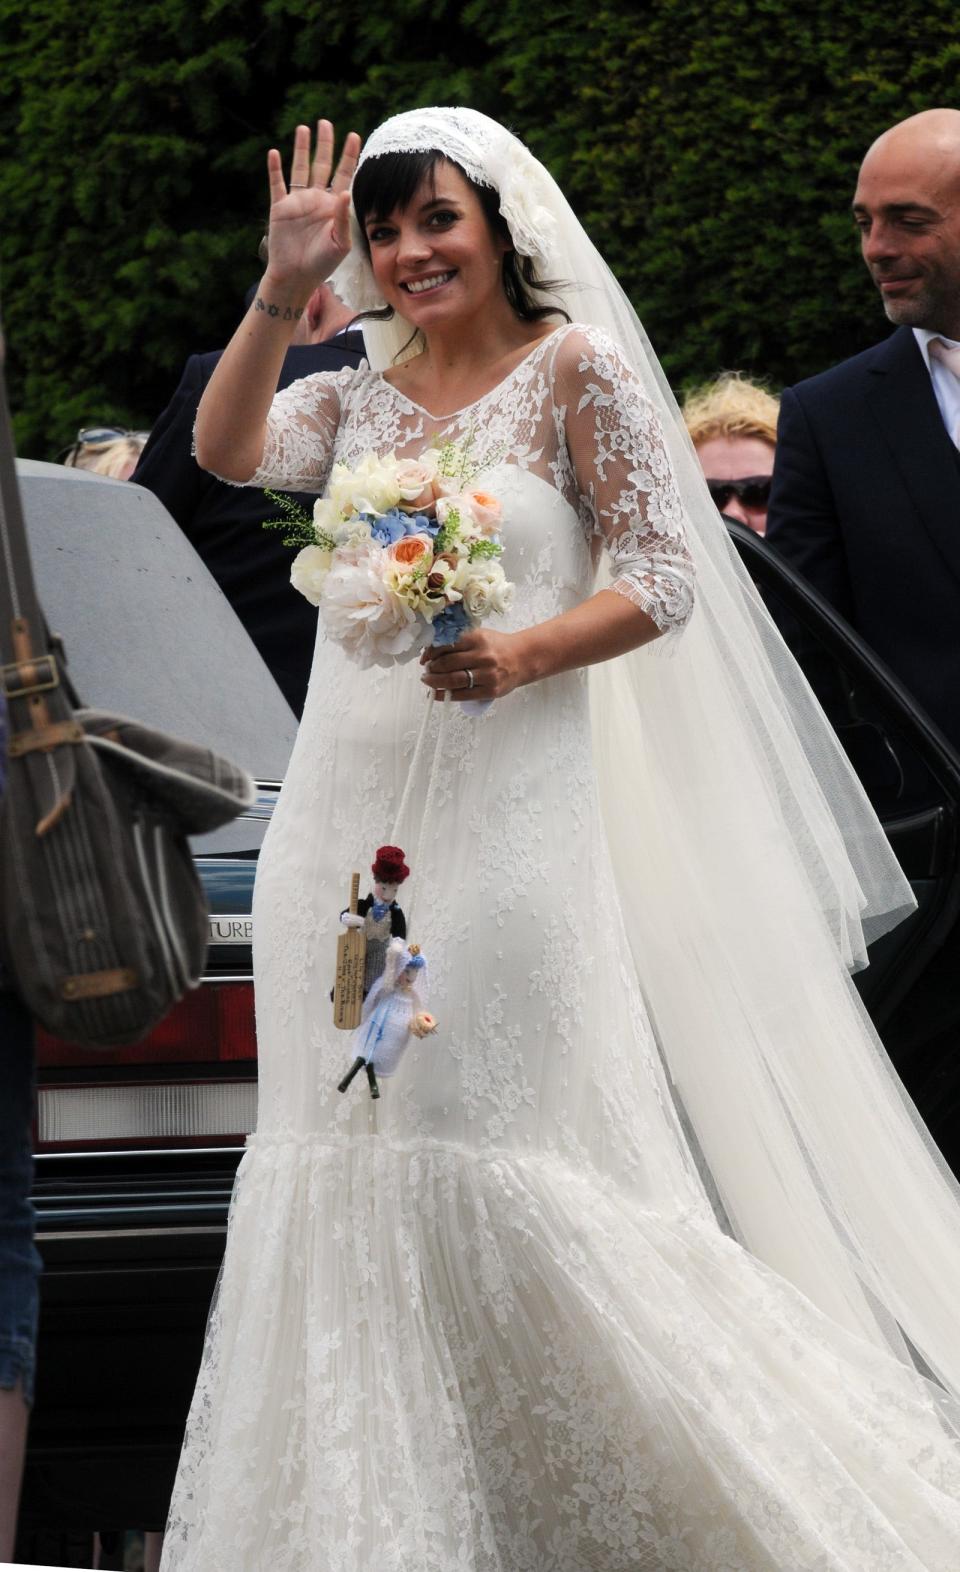 Lily Allen's wedding dress on her wedding day.